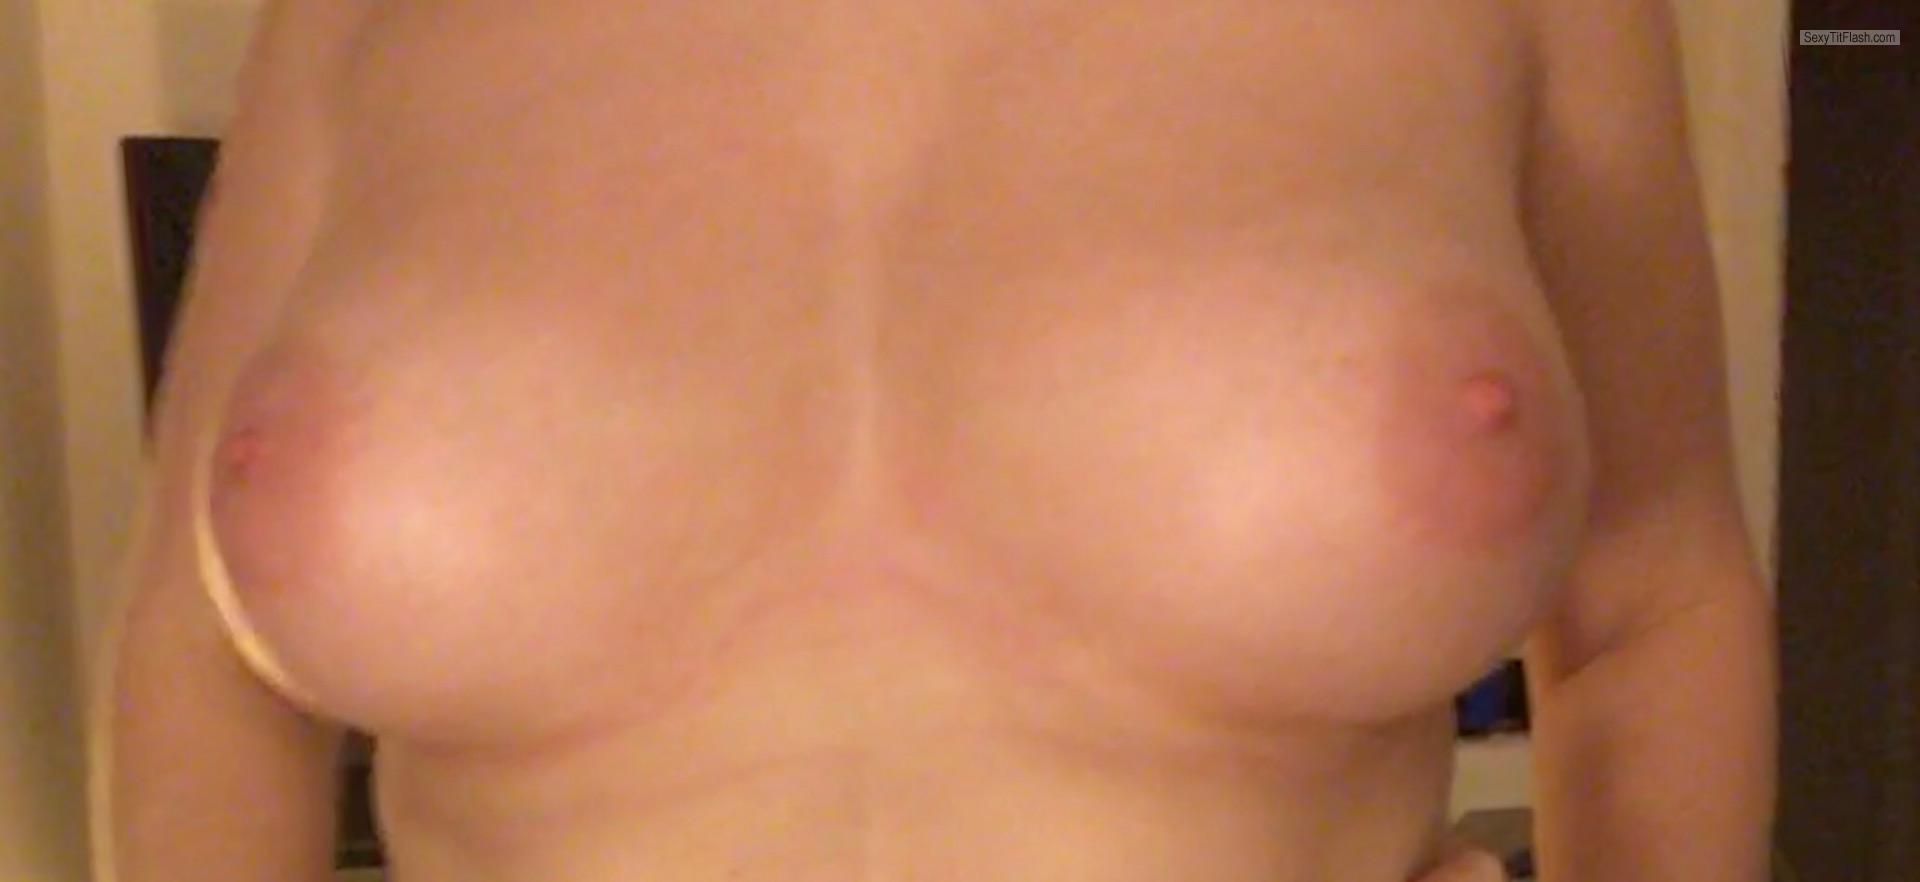 Tit Flash: Girlfriend's Medium Tits - Silvie from Poland